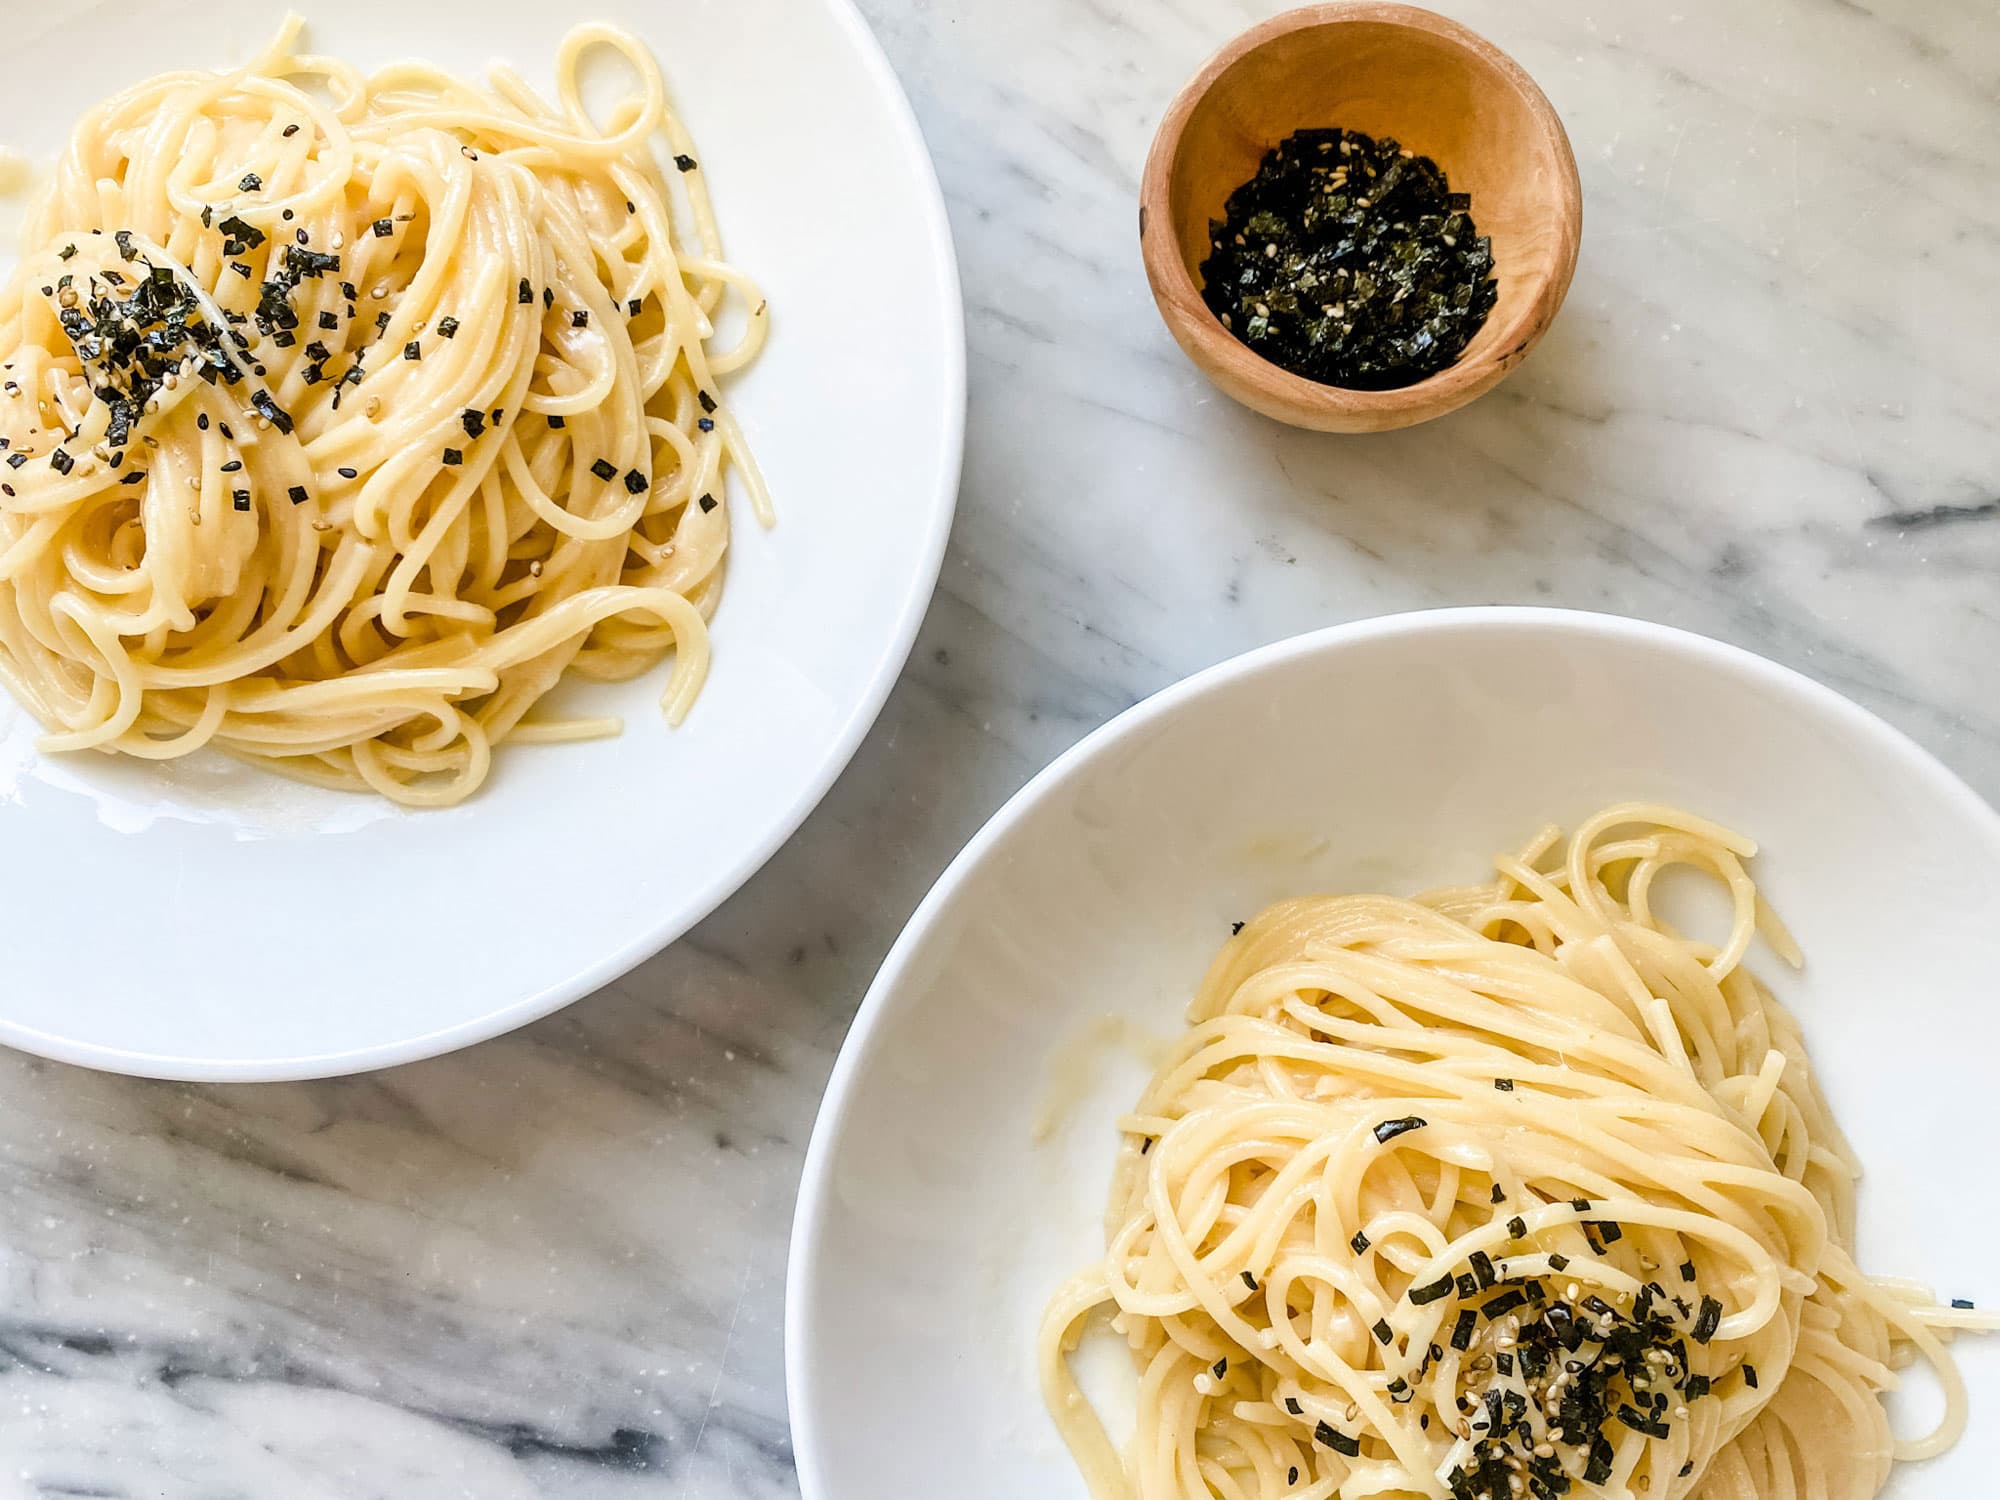 A 30-Minute Miso Pasta Recipe To Celebrate Summer